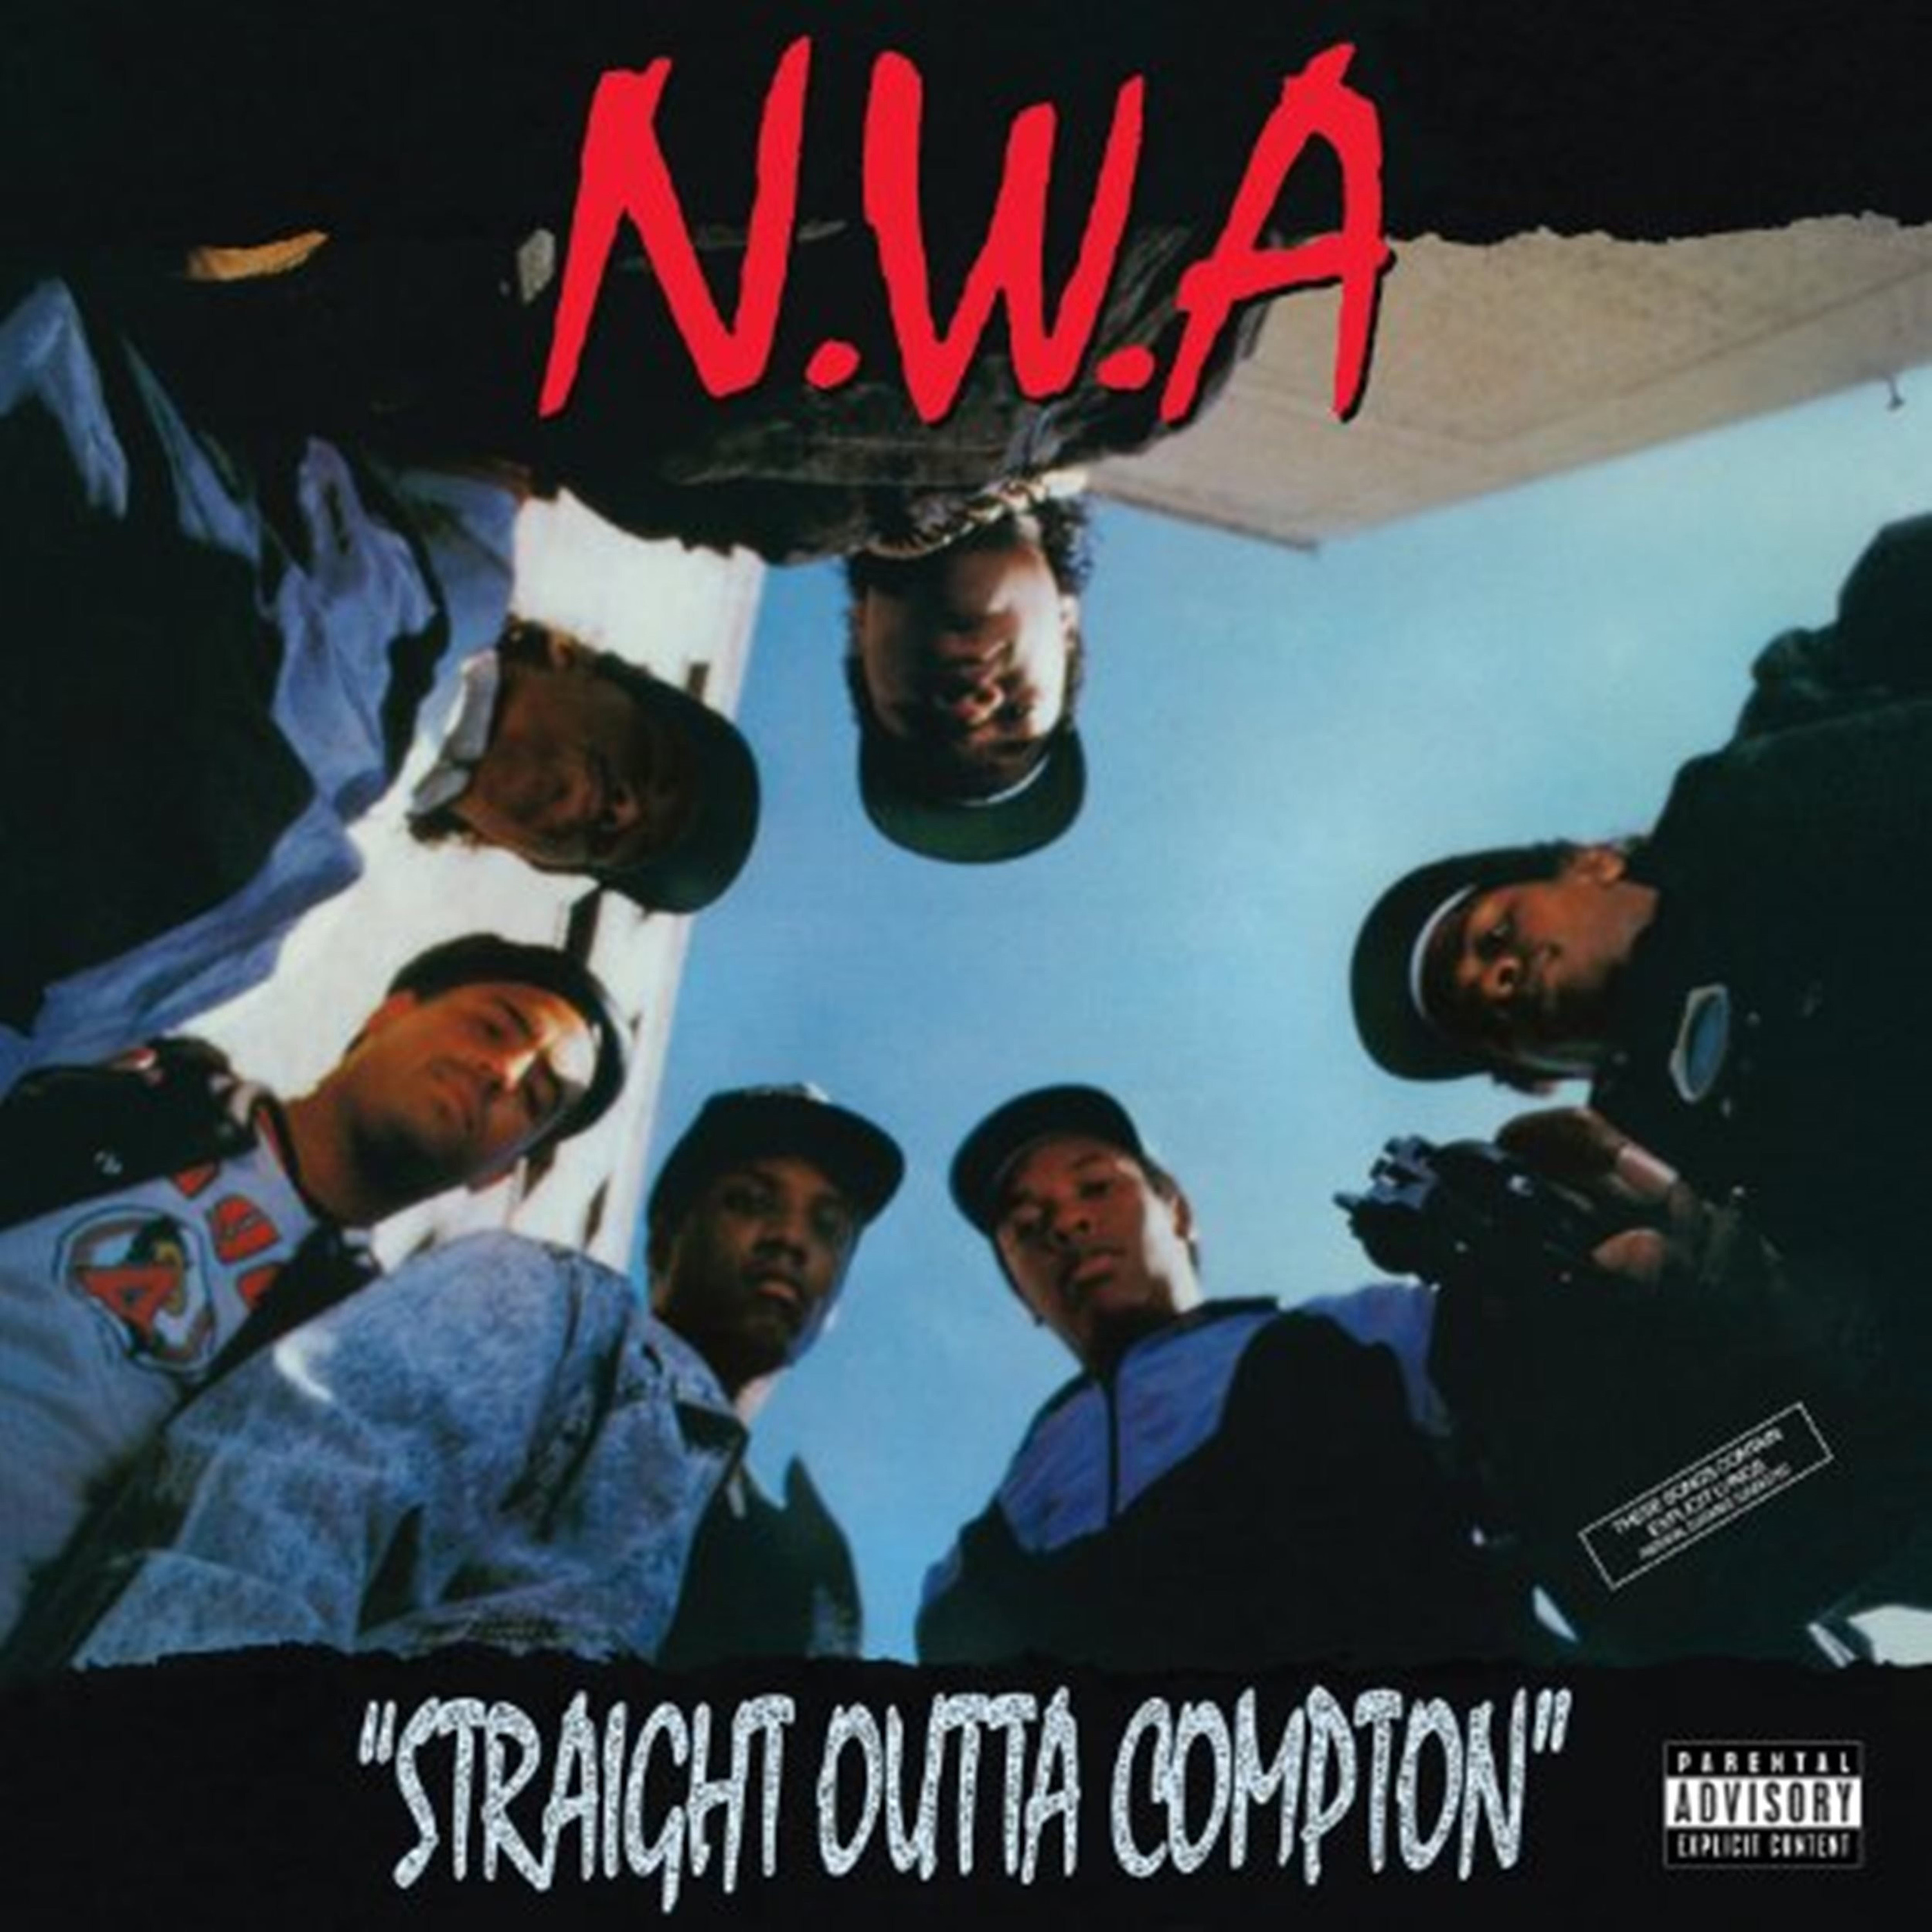 NWA "Straight Outta Compton" album cover. Courtesy Aftermath/Interscope